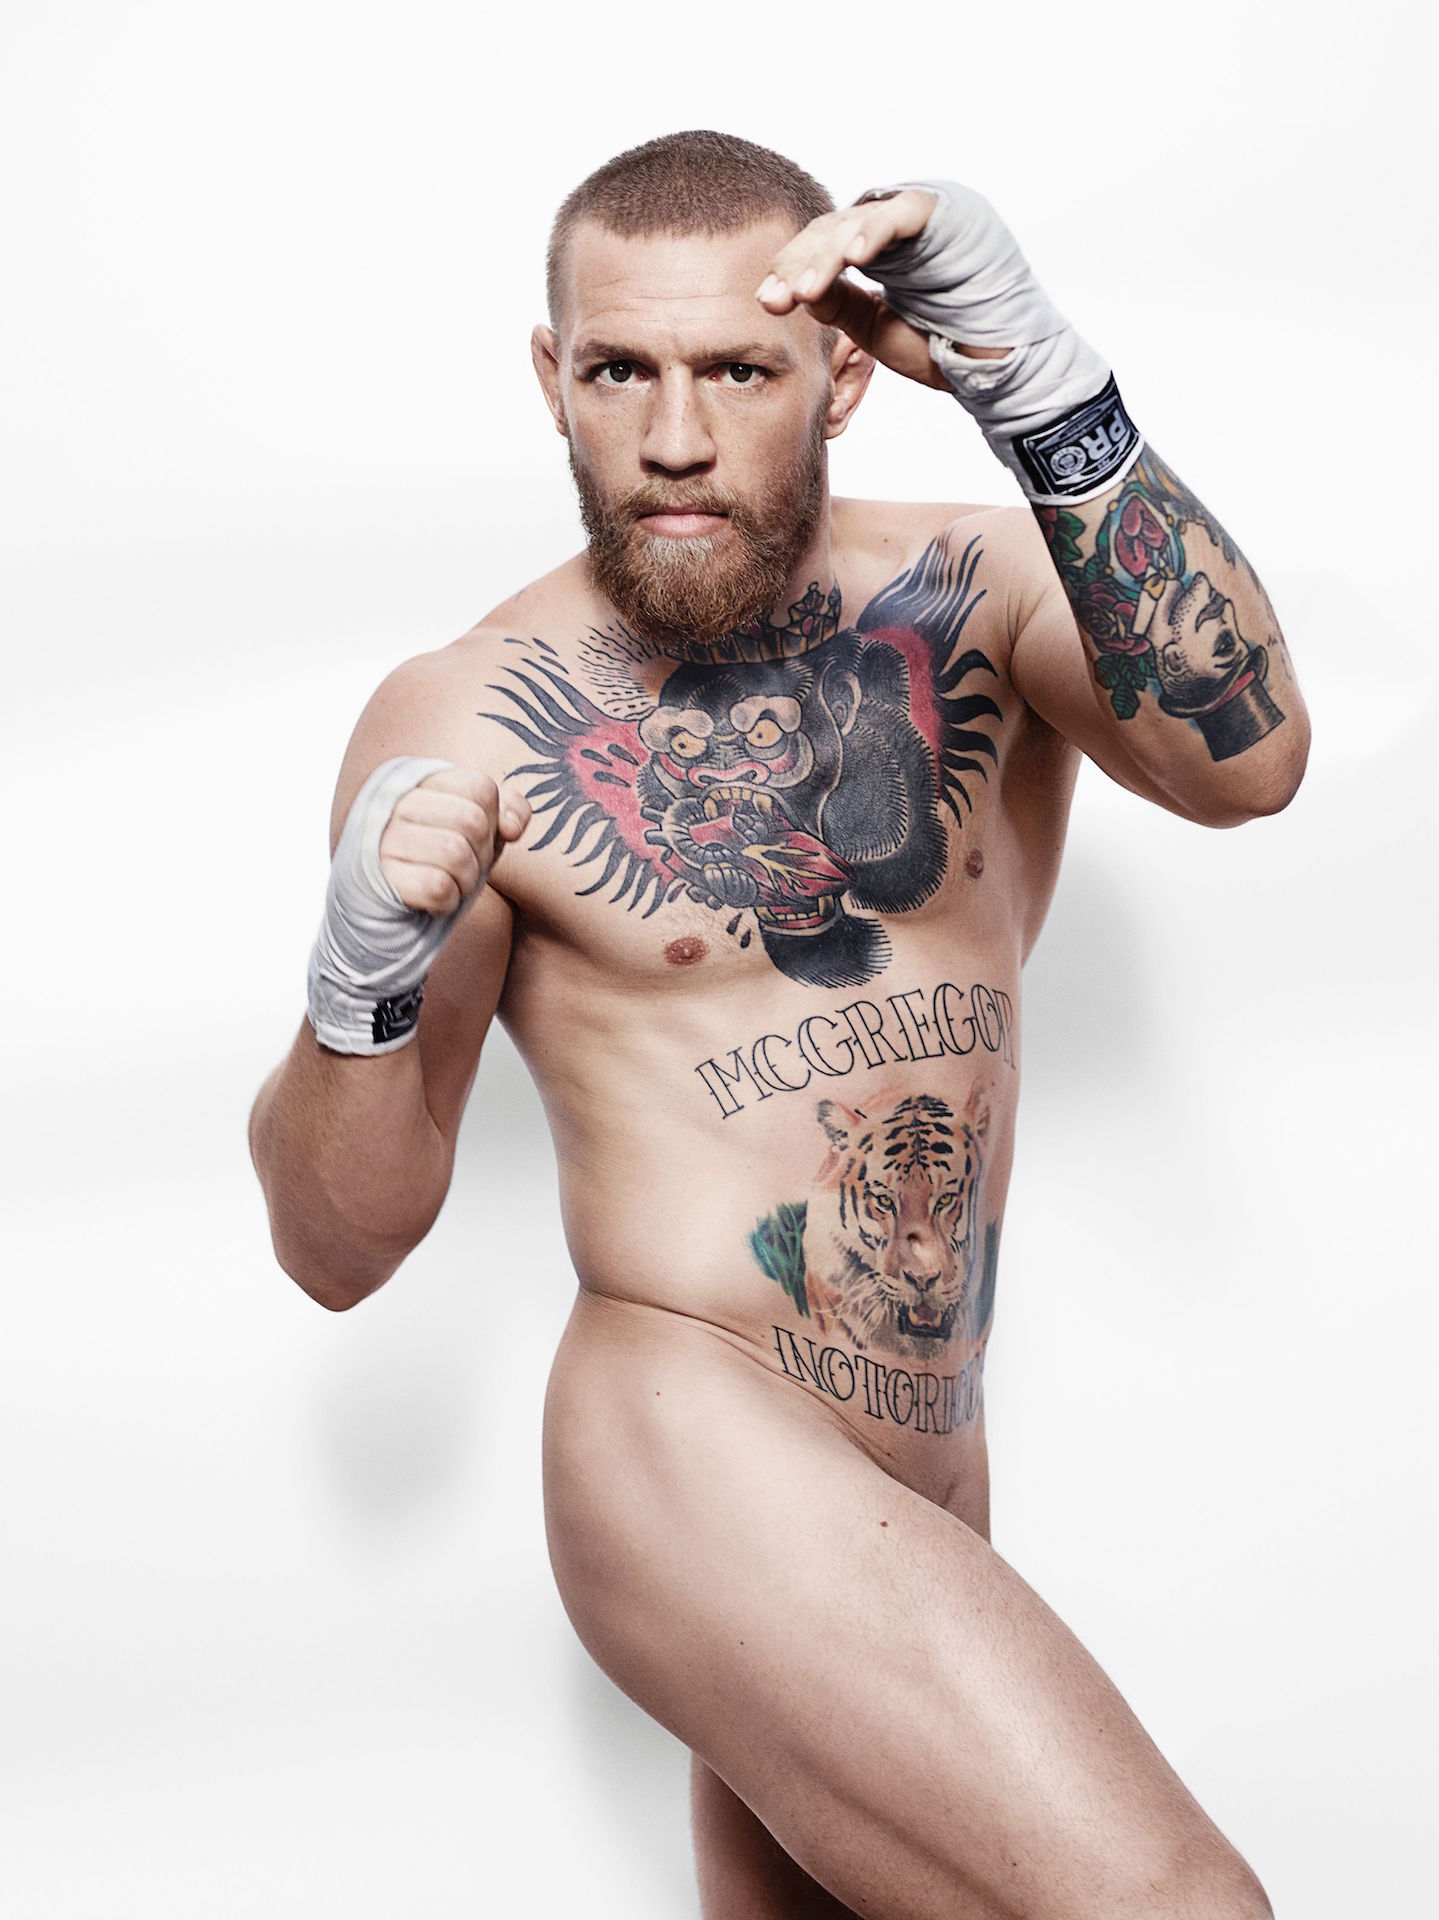 Mcgregor nudes conor leaked UFC: Conor